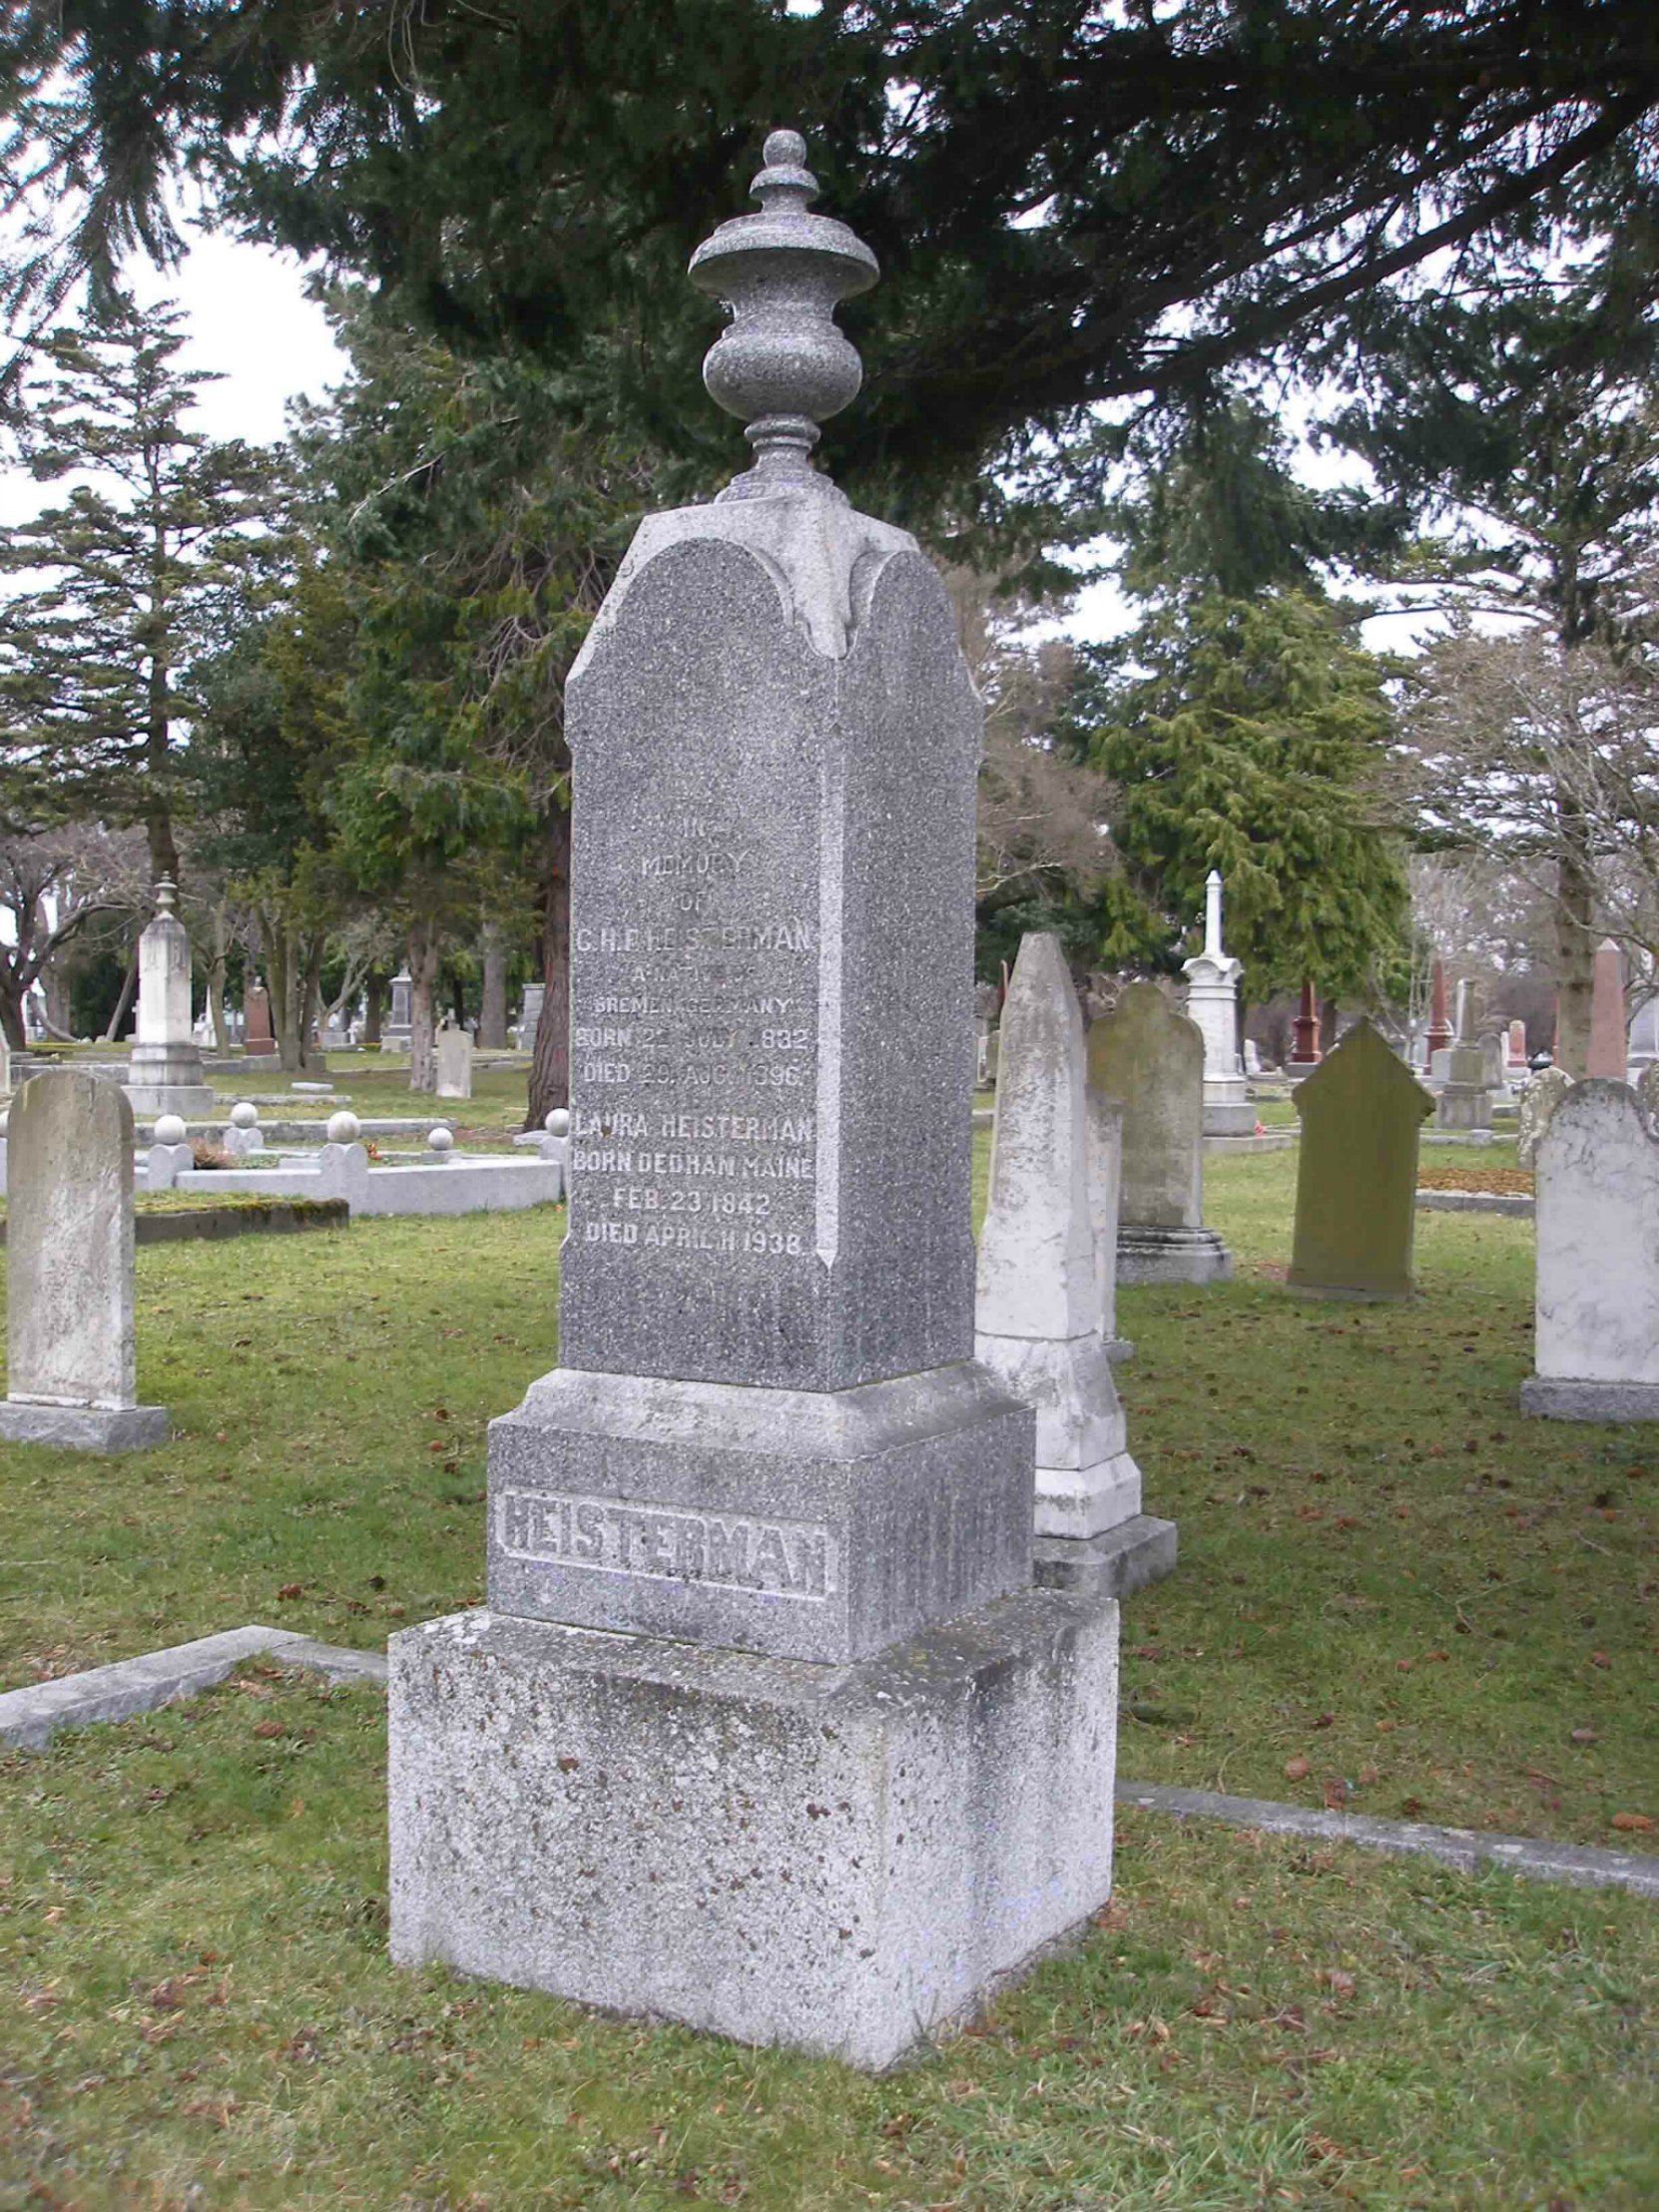 Henry Frederick Heisterman grave, Ross Bay Cemetery, Victoria, B.C.